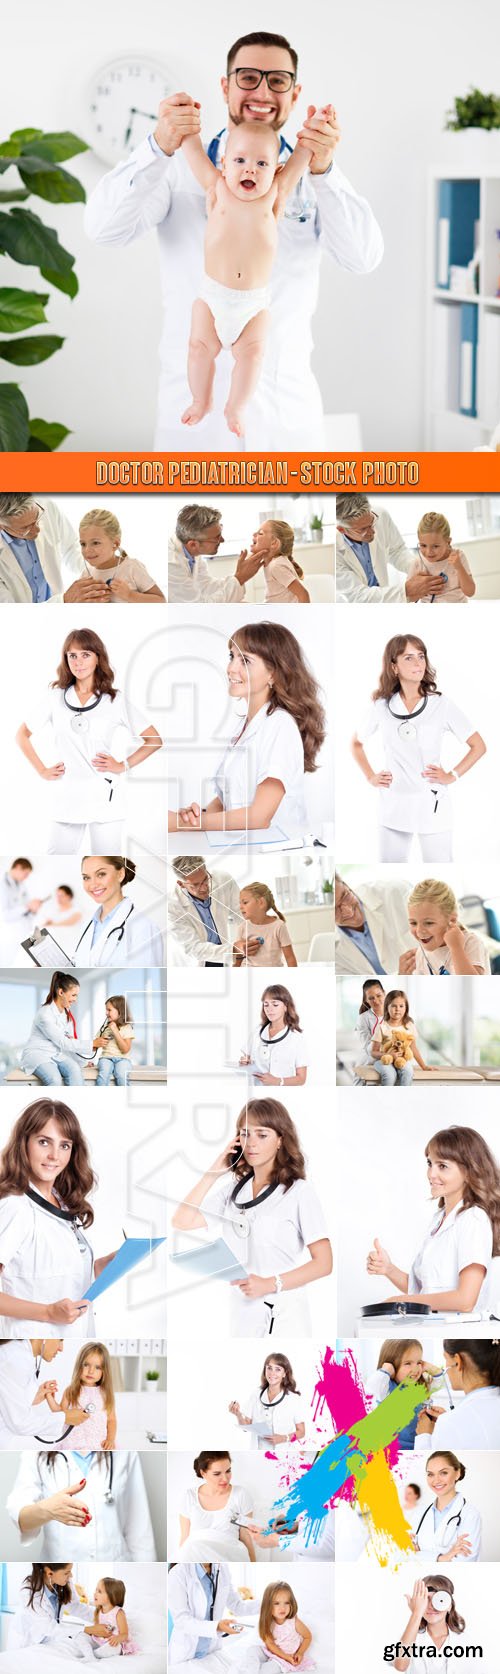 Doctor pediatrician - Stock Photo